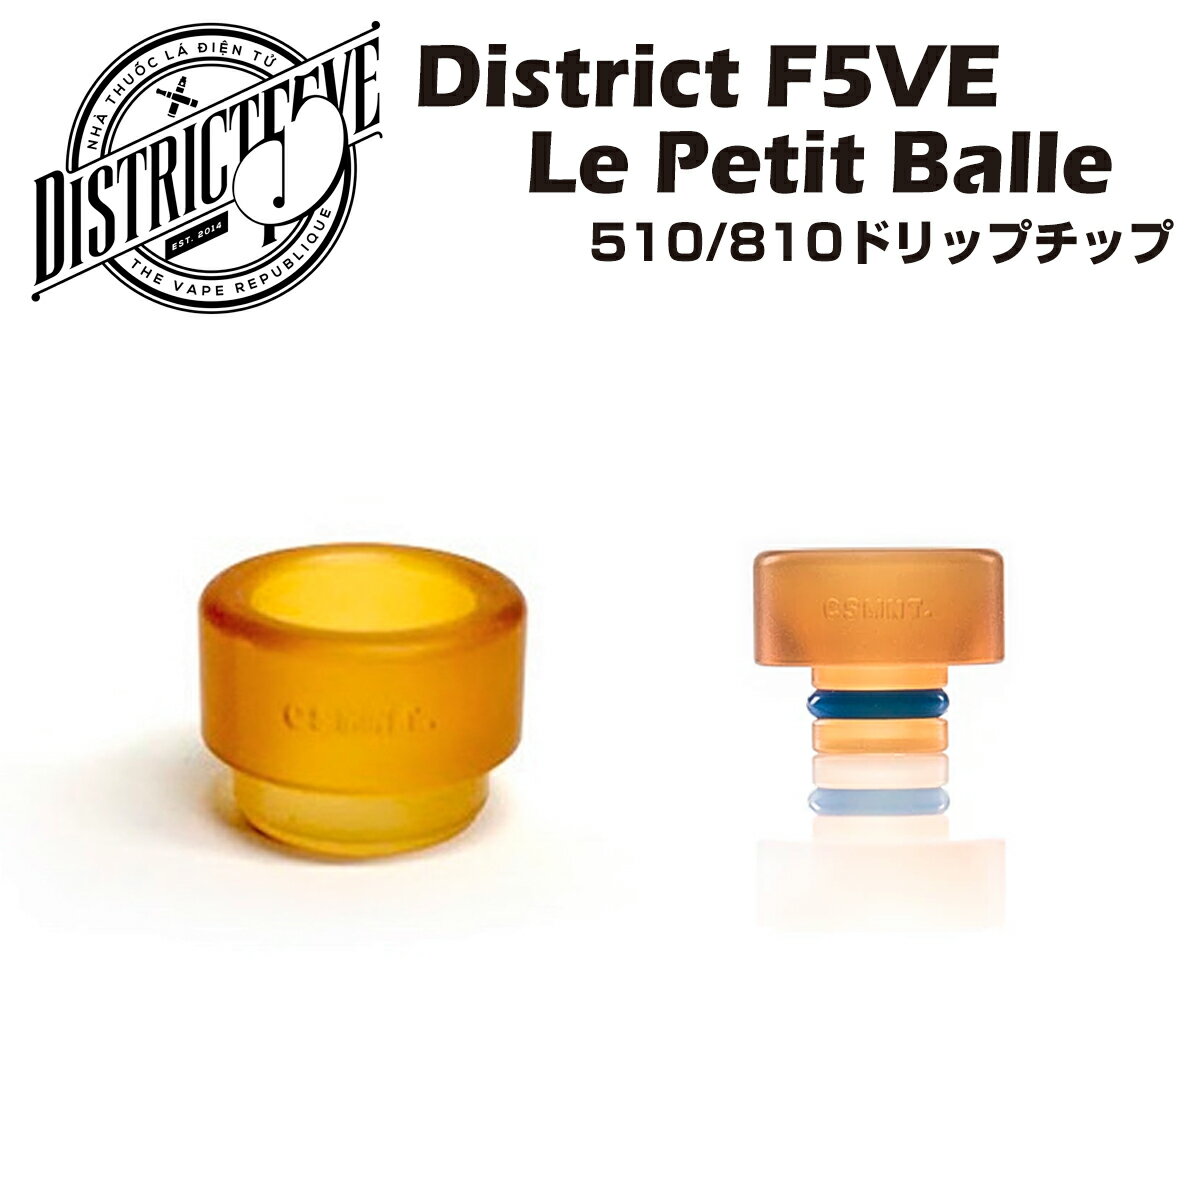 yz District F5VE / Le Petit Balle Drip Tip hbv`bv 510/810 Ee dq^oR dq΂ xCv h` Vape